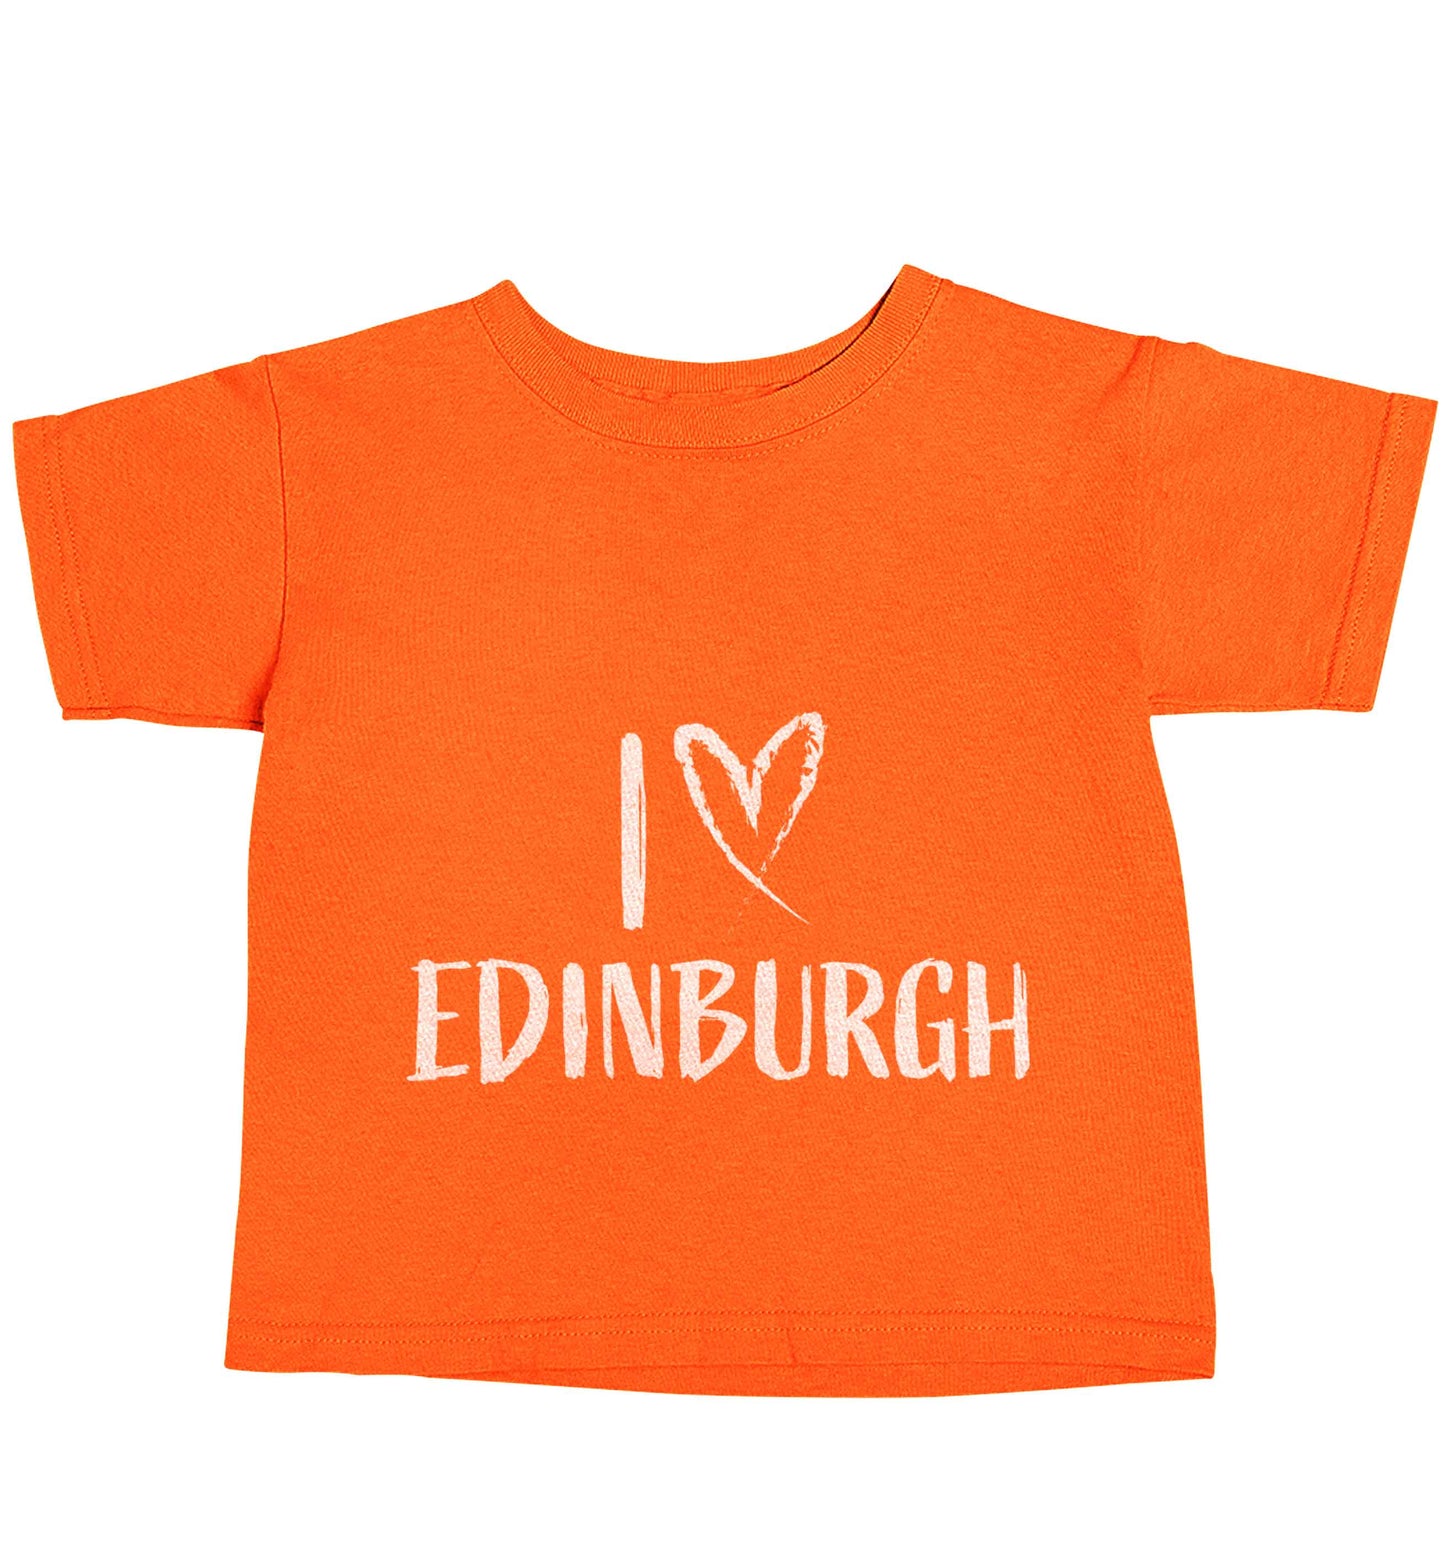 I love Edinburgh orange baby toddler Tshirt 2 Years